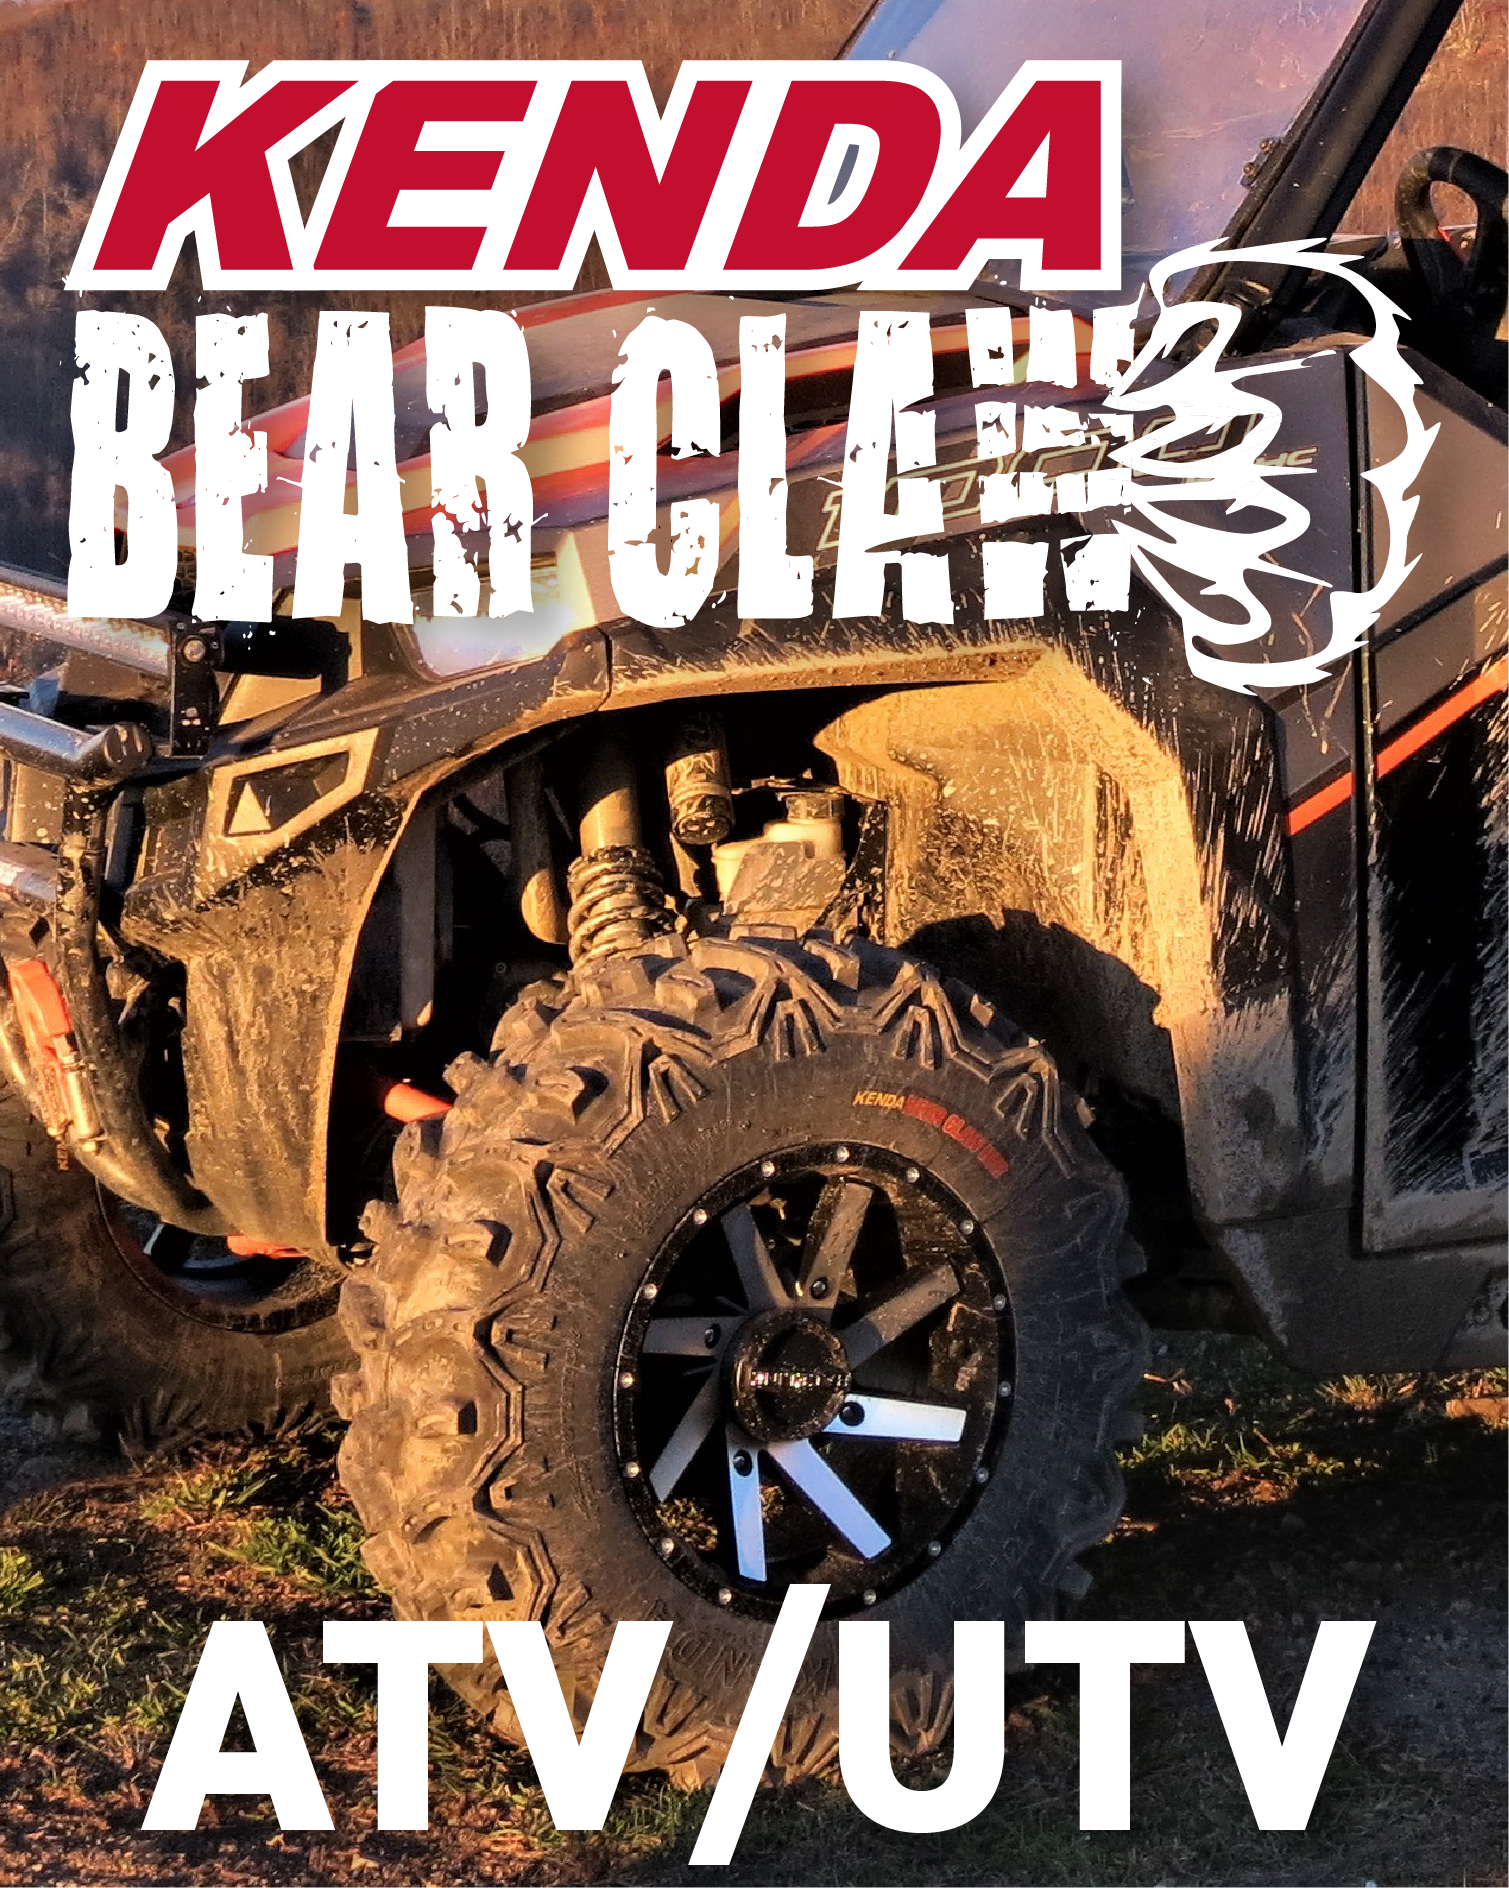 Kenda Bear Claw EX 22x11-10 Rear 6 PLY ATV Tires Bearclaw 22x11x10 (2 Pack)